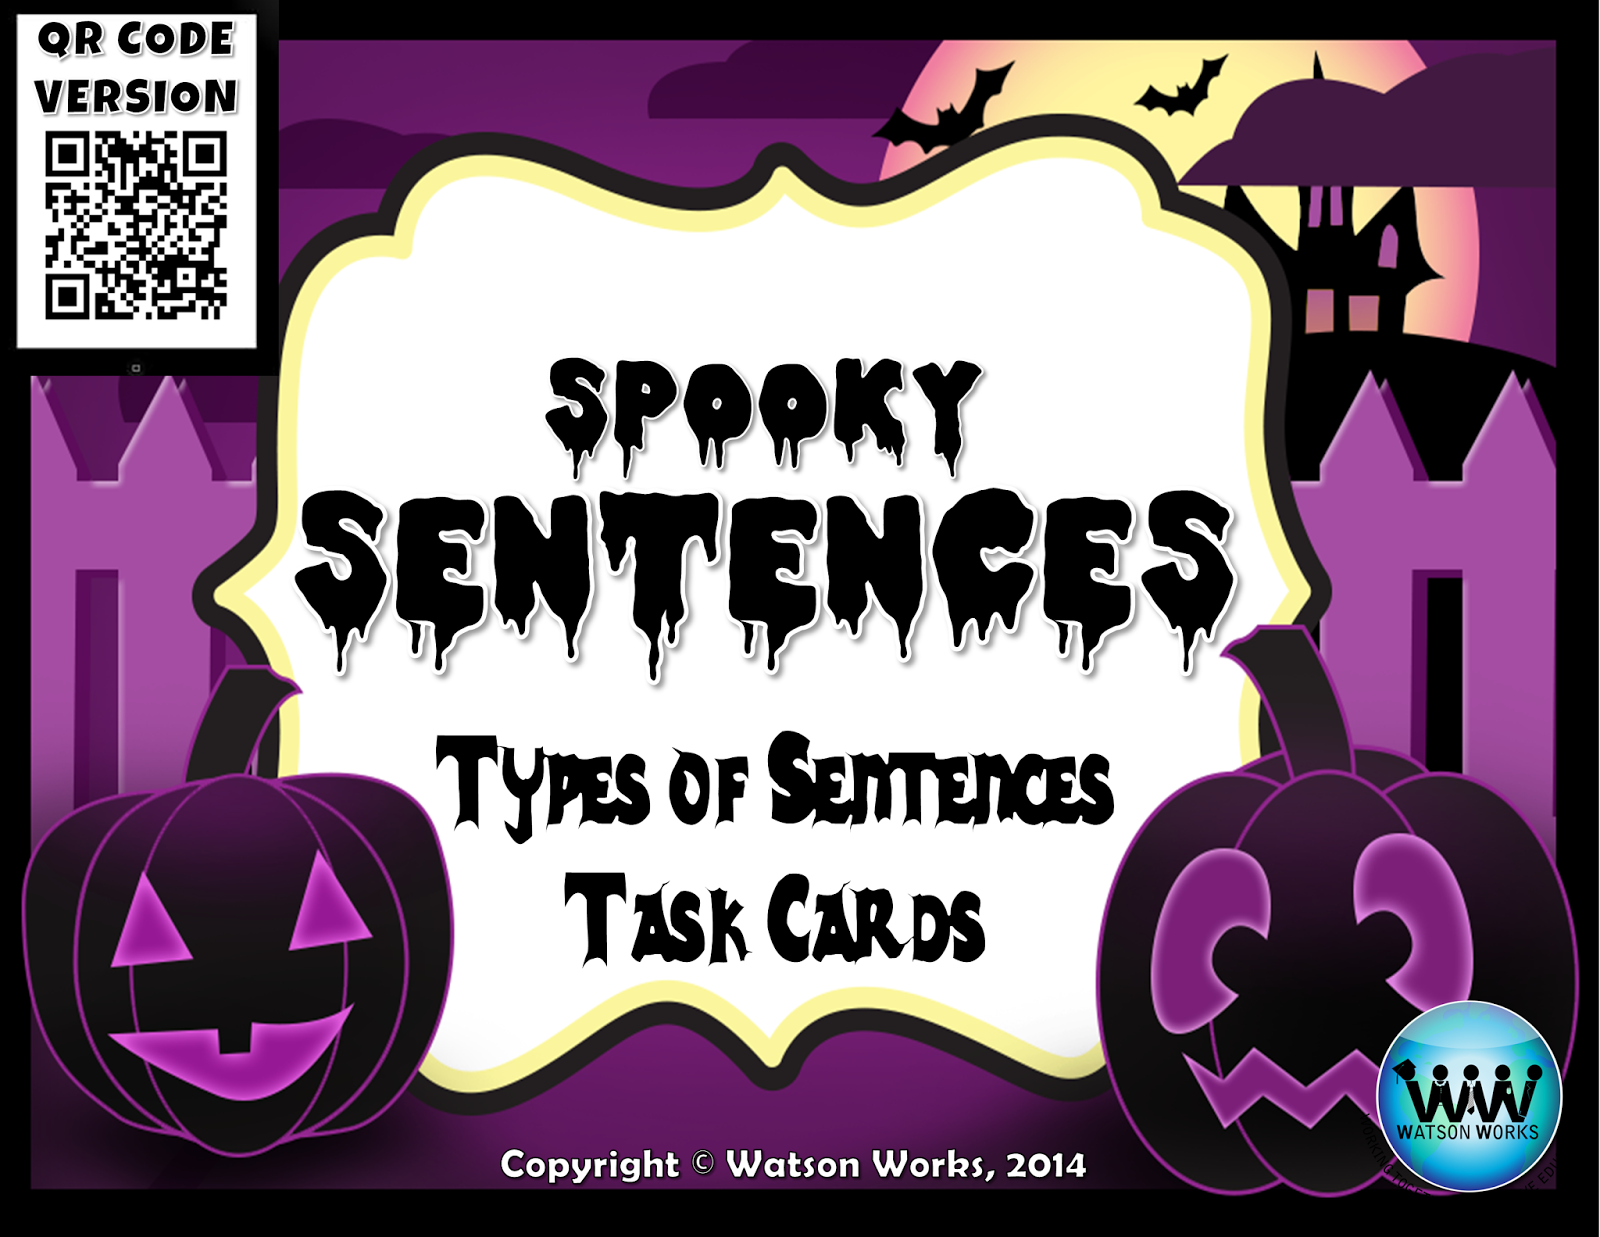 http://www.teacherspayteachers.com/Product/Spooky-Sentences-Types-of-Sentences-Task-Cards-QR-Code-Version-1485557